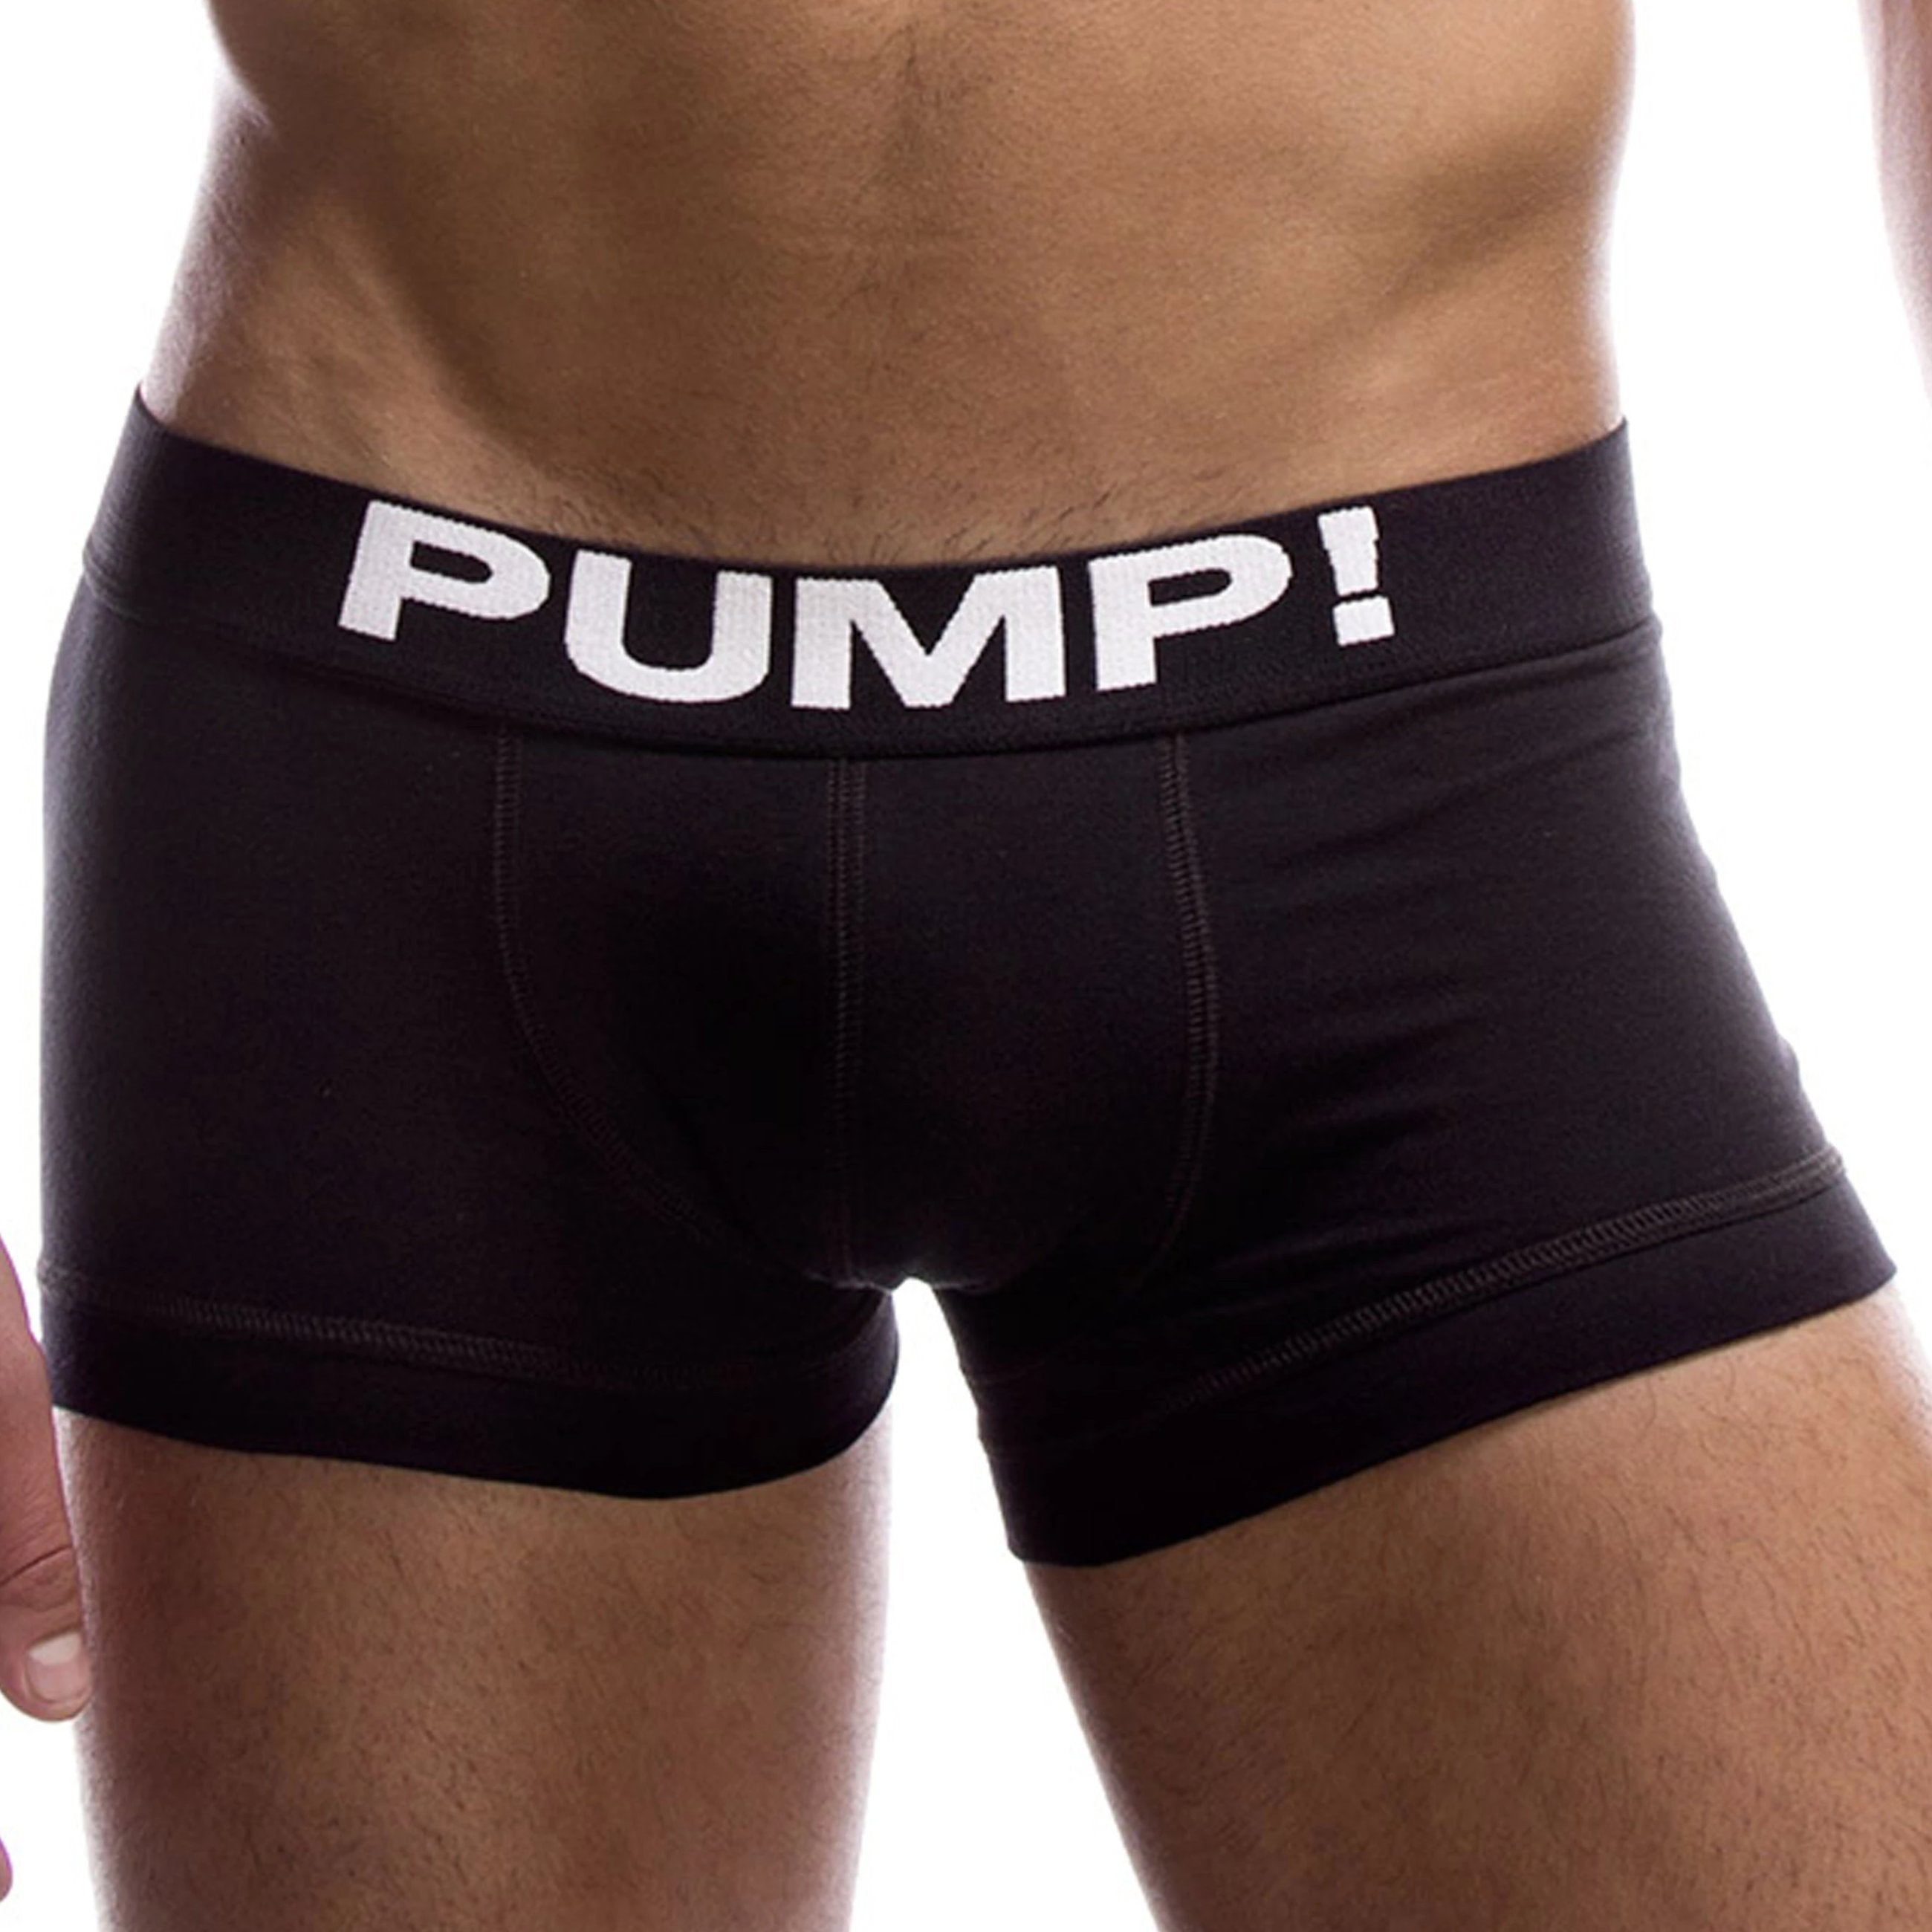 Classic Boxer - Black Front by PUMP! Underwear at Trenderwear.com